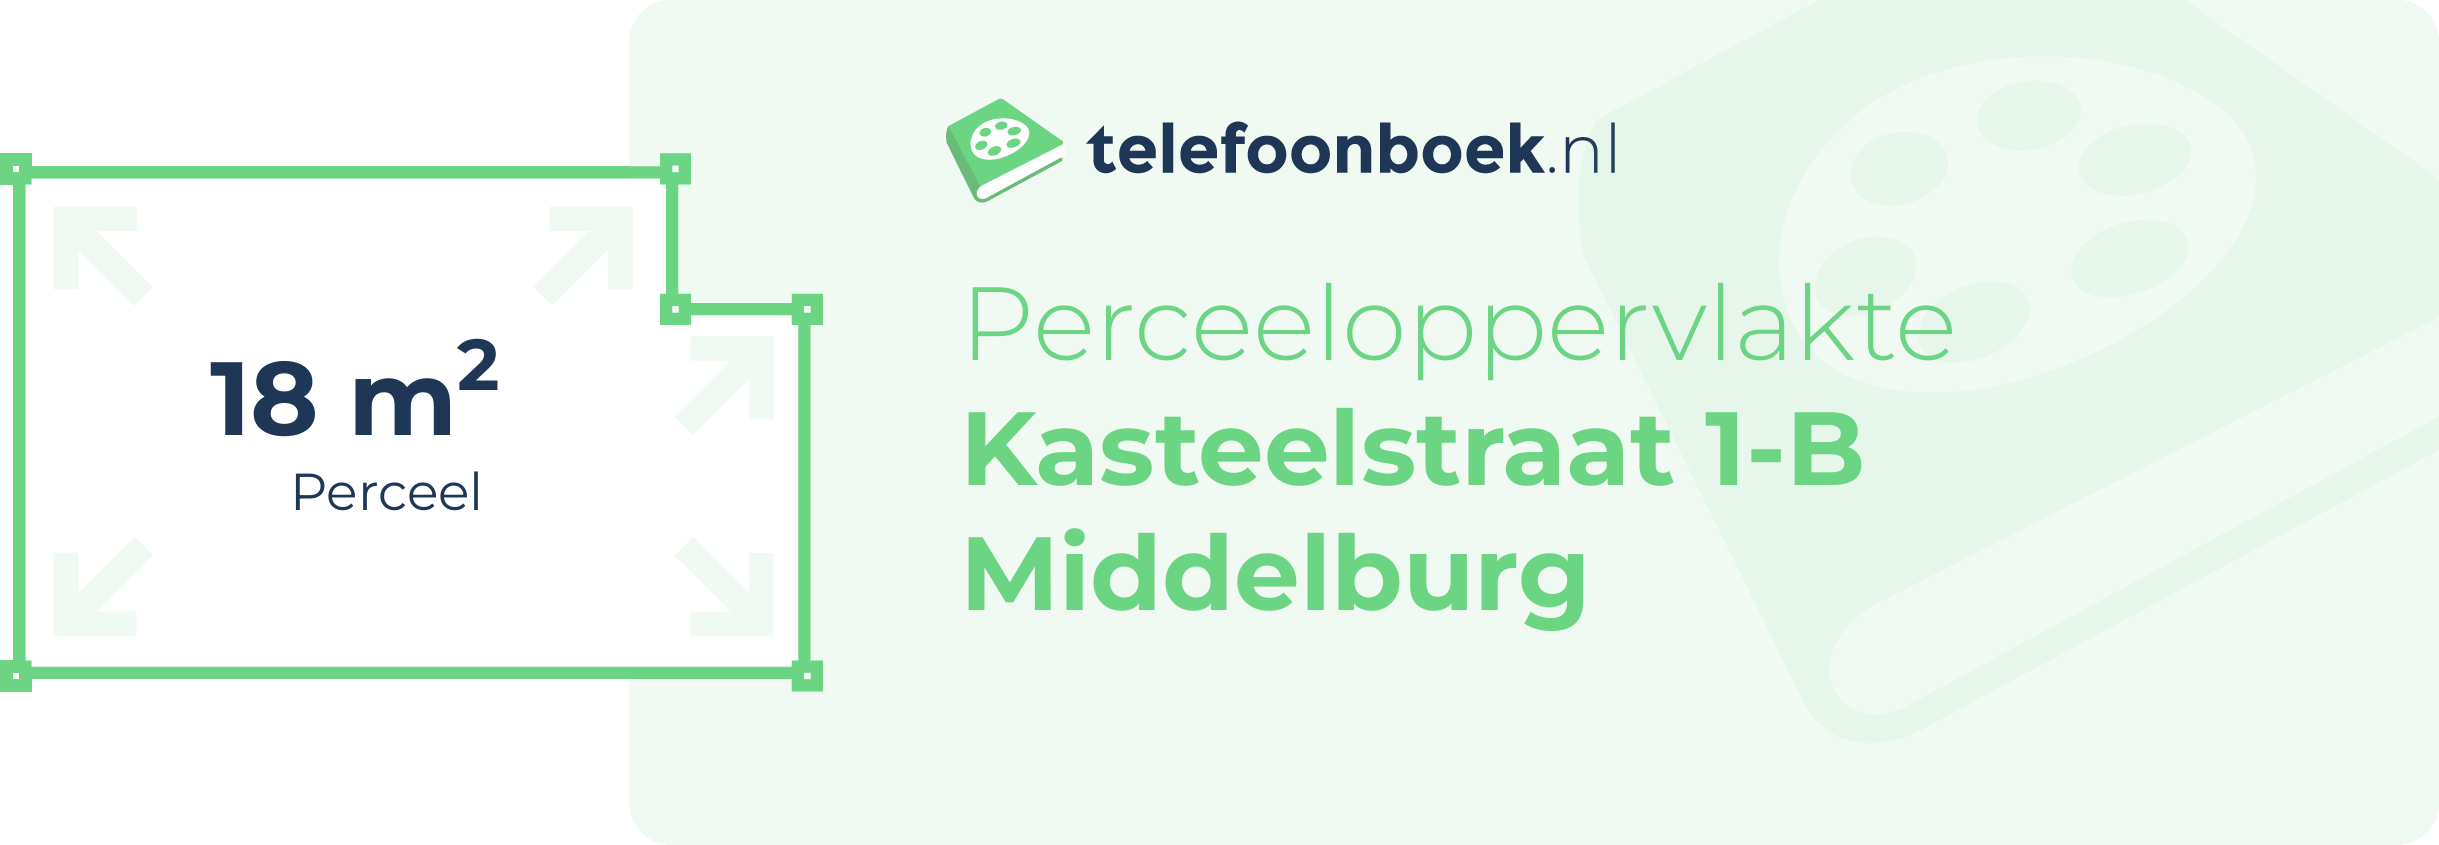 Perceeloppervlakte Kasteelstraat 1-B Middelburg